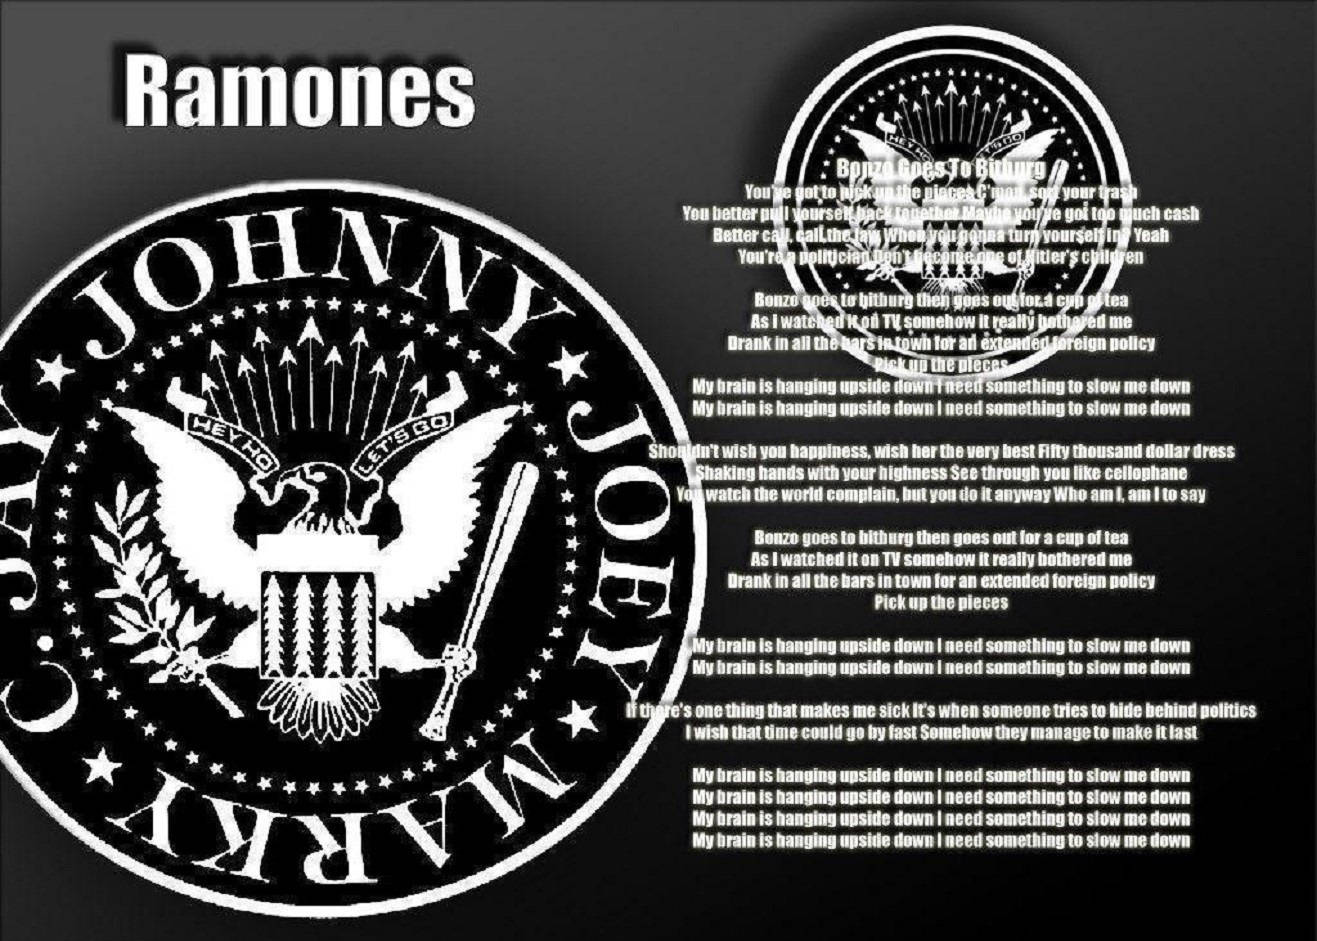 The Ramones Eagle With Bonzo Goes To Bitburg Lyrics Illustration Wallpaper